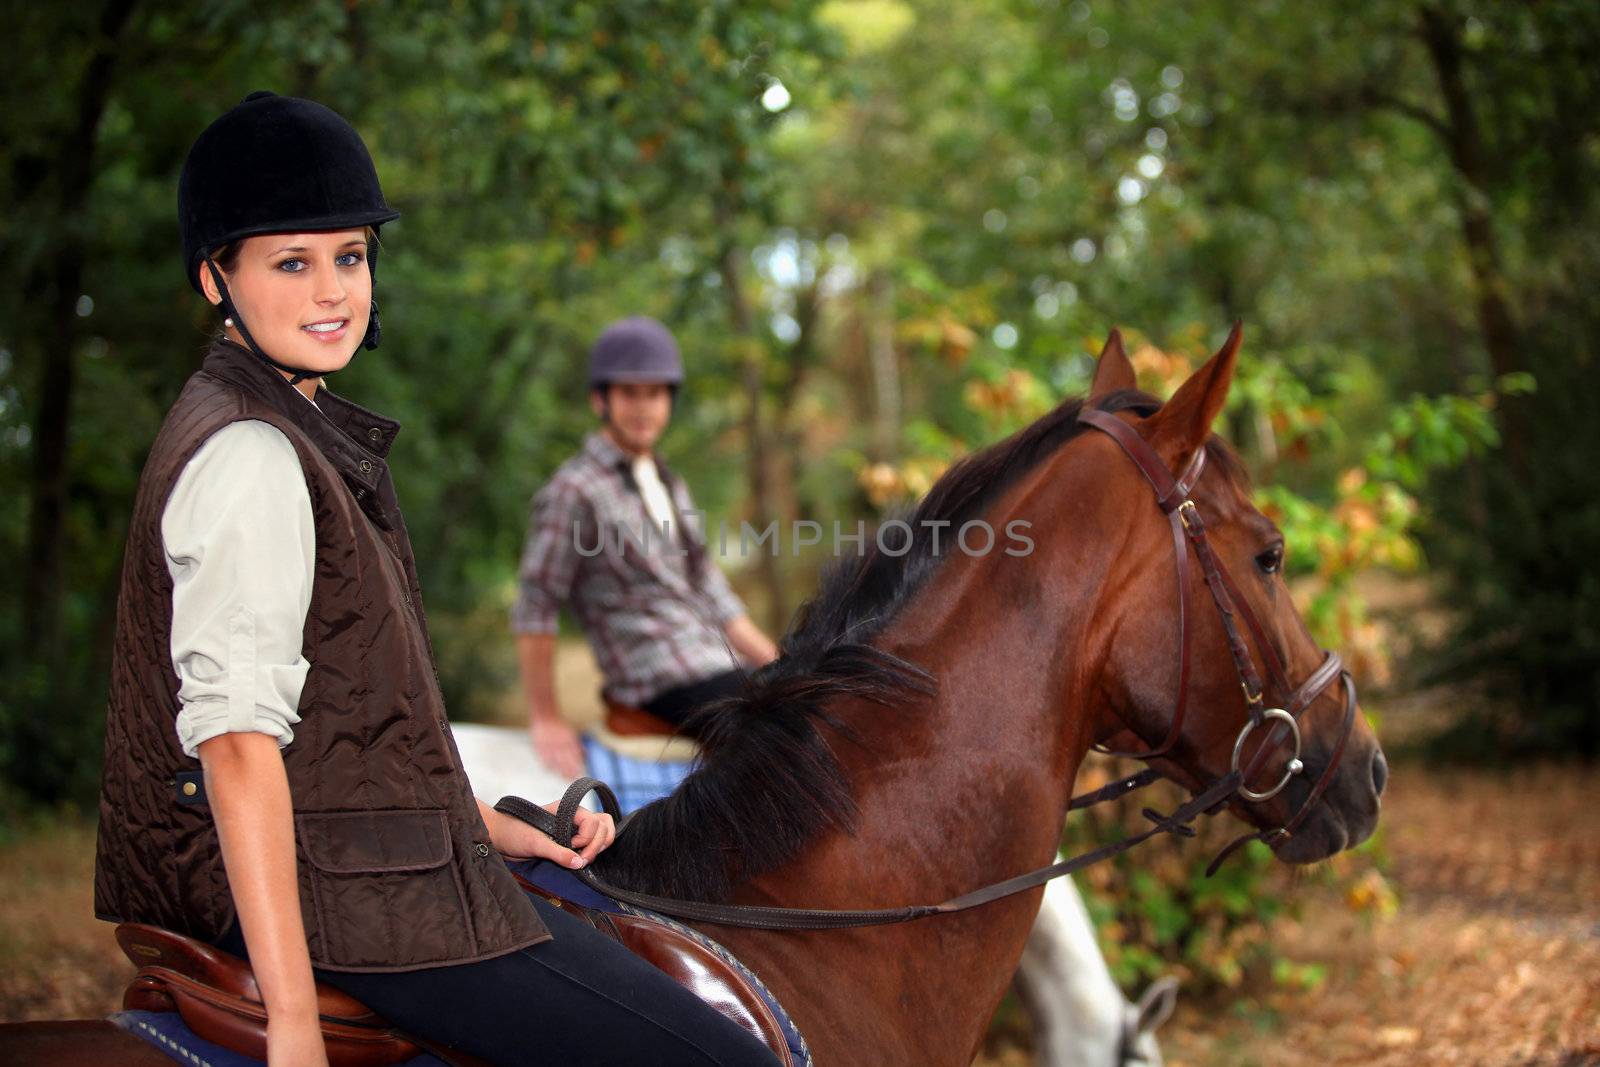 A horseback rider